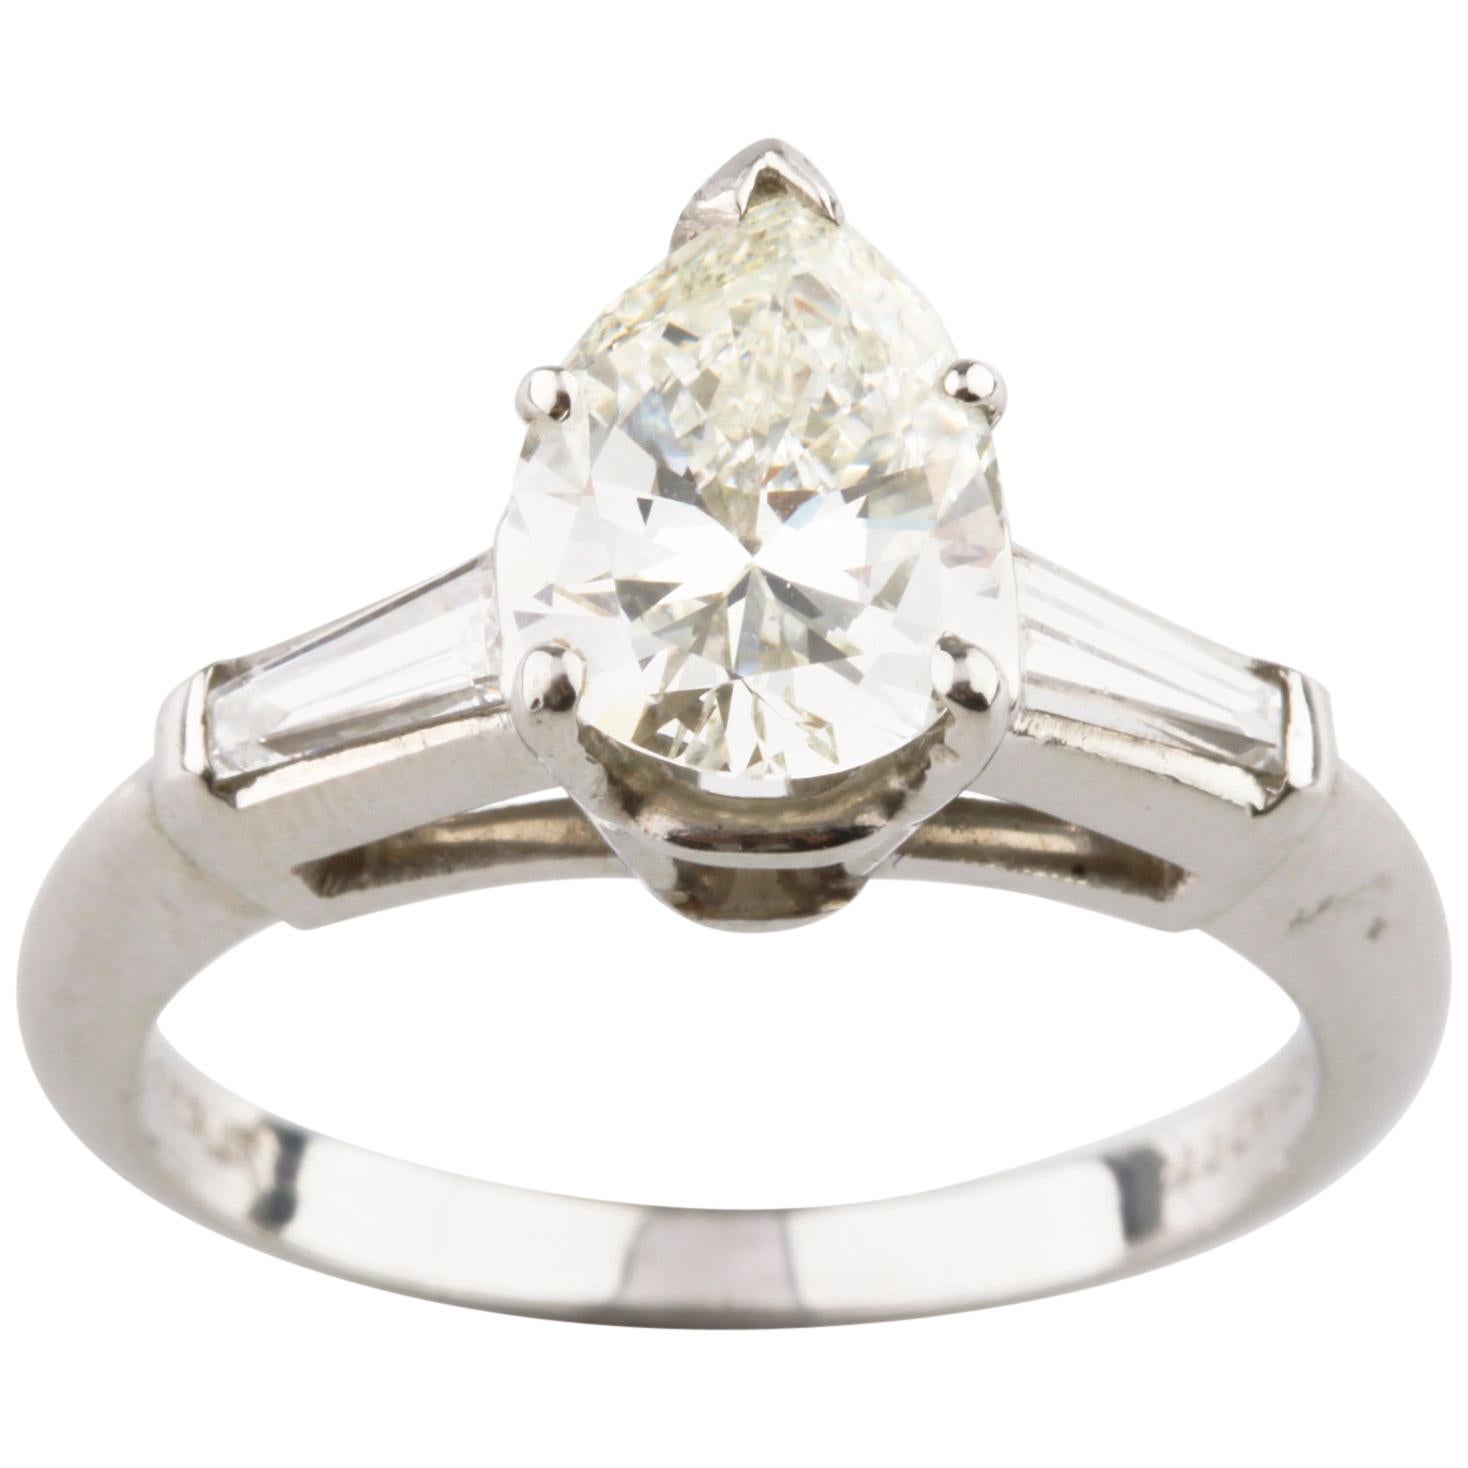 1.80 Carat Pear Shape Diamond Platinum Engagement Ring with Accent Stones